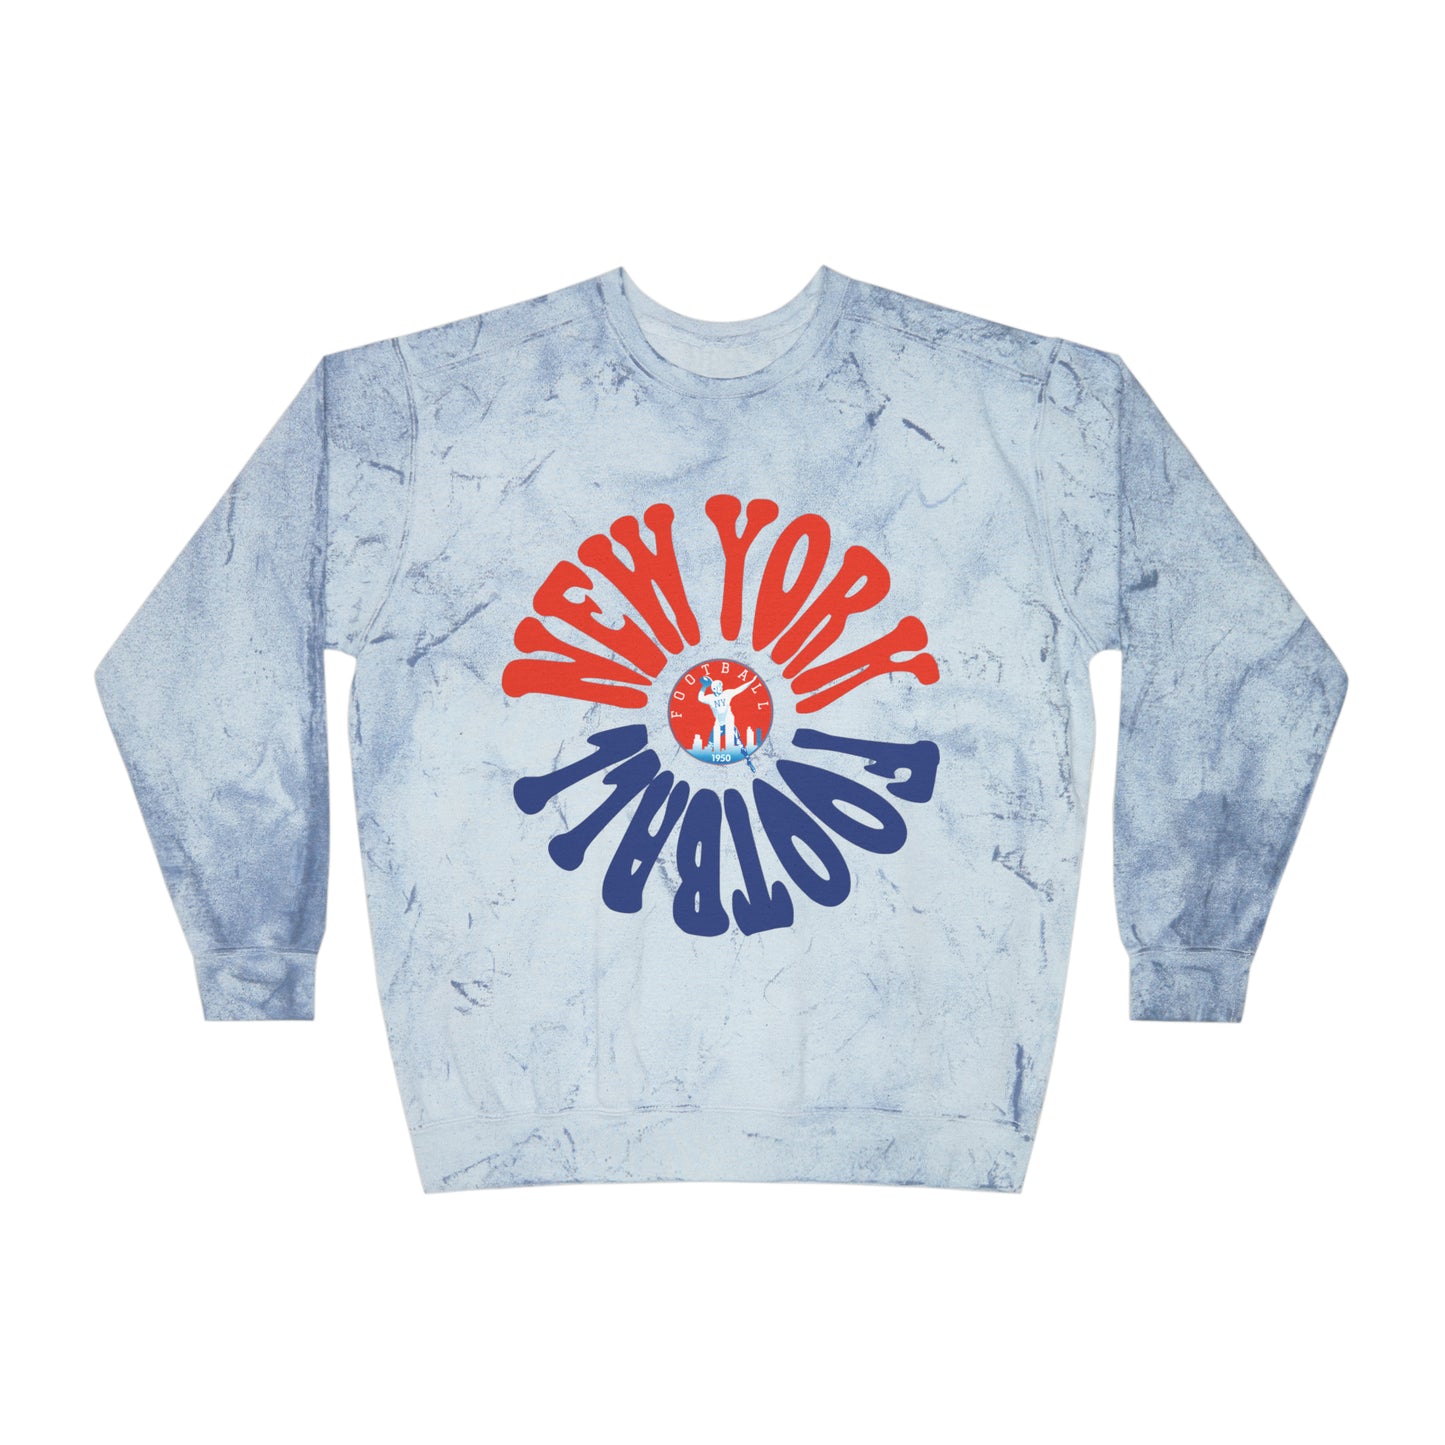 Tie Dye Hippy Retro New York Giants Football Sweatshirt - Vintage Style Football Crewneck - Men's & Women's Football Apparel